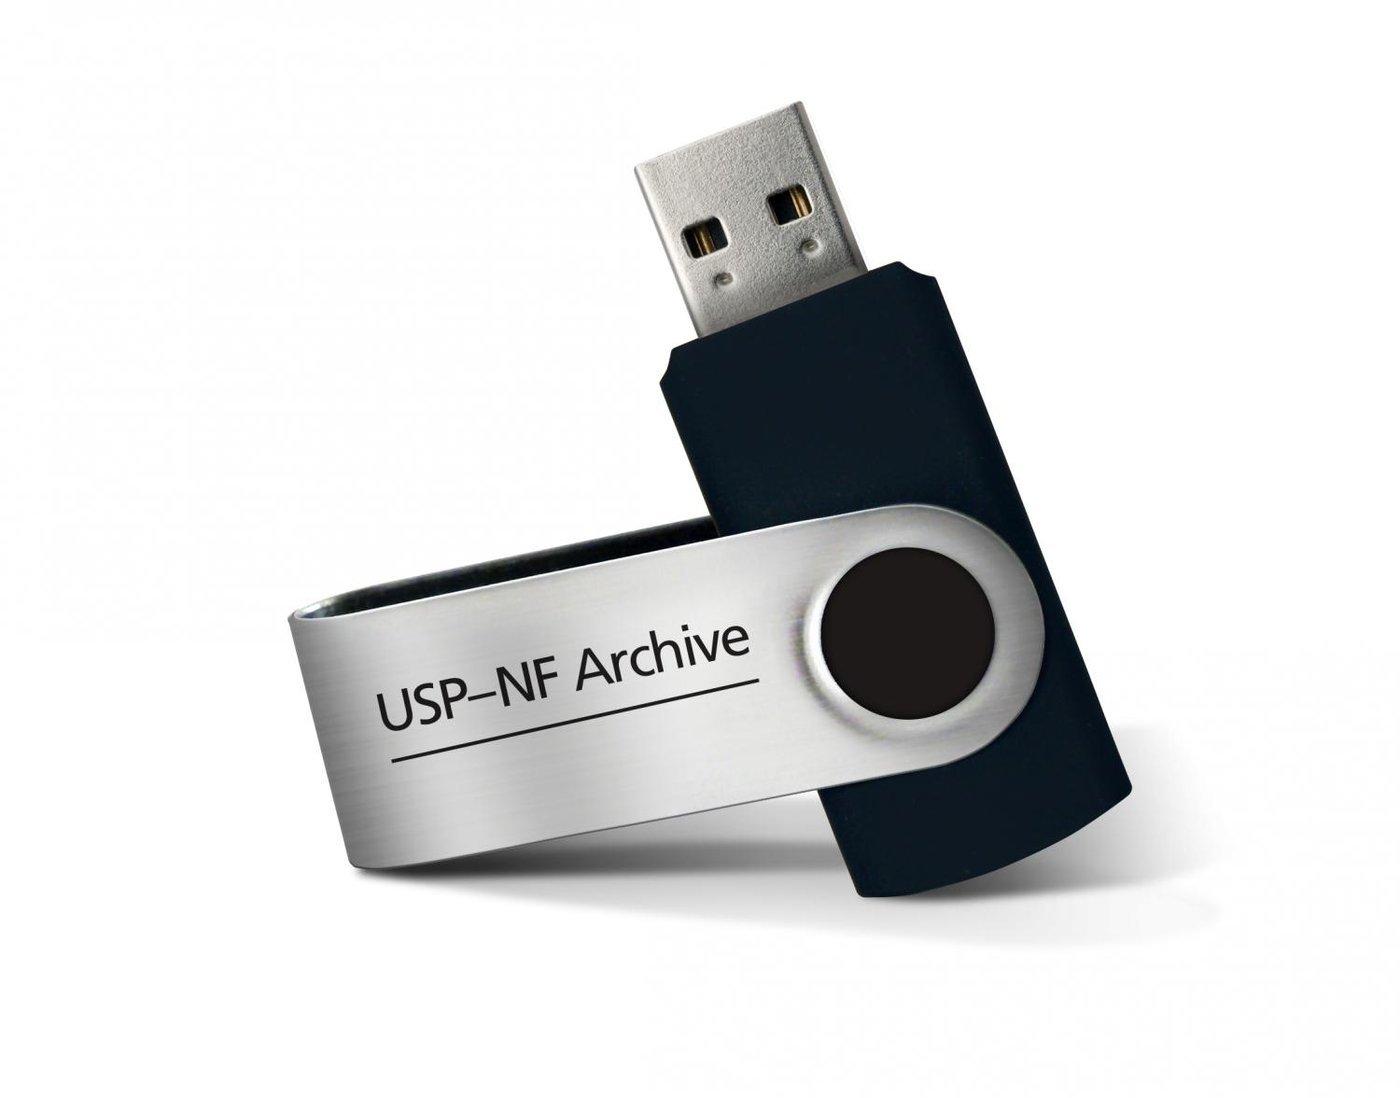 USP-NF Archive USP28-NF23 - USP36-NF31
United States Pharmacopeia and National Formulary
single user, USB-Stick